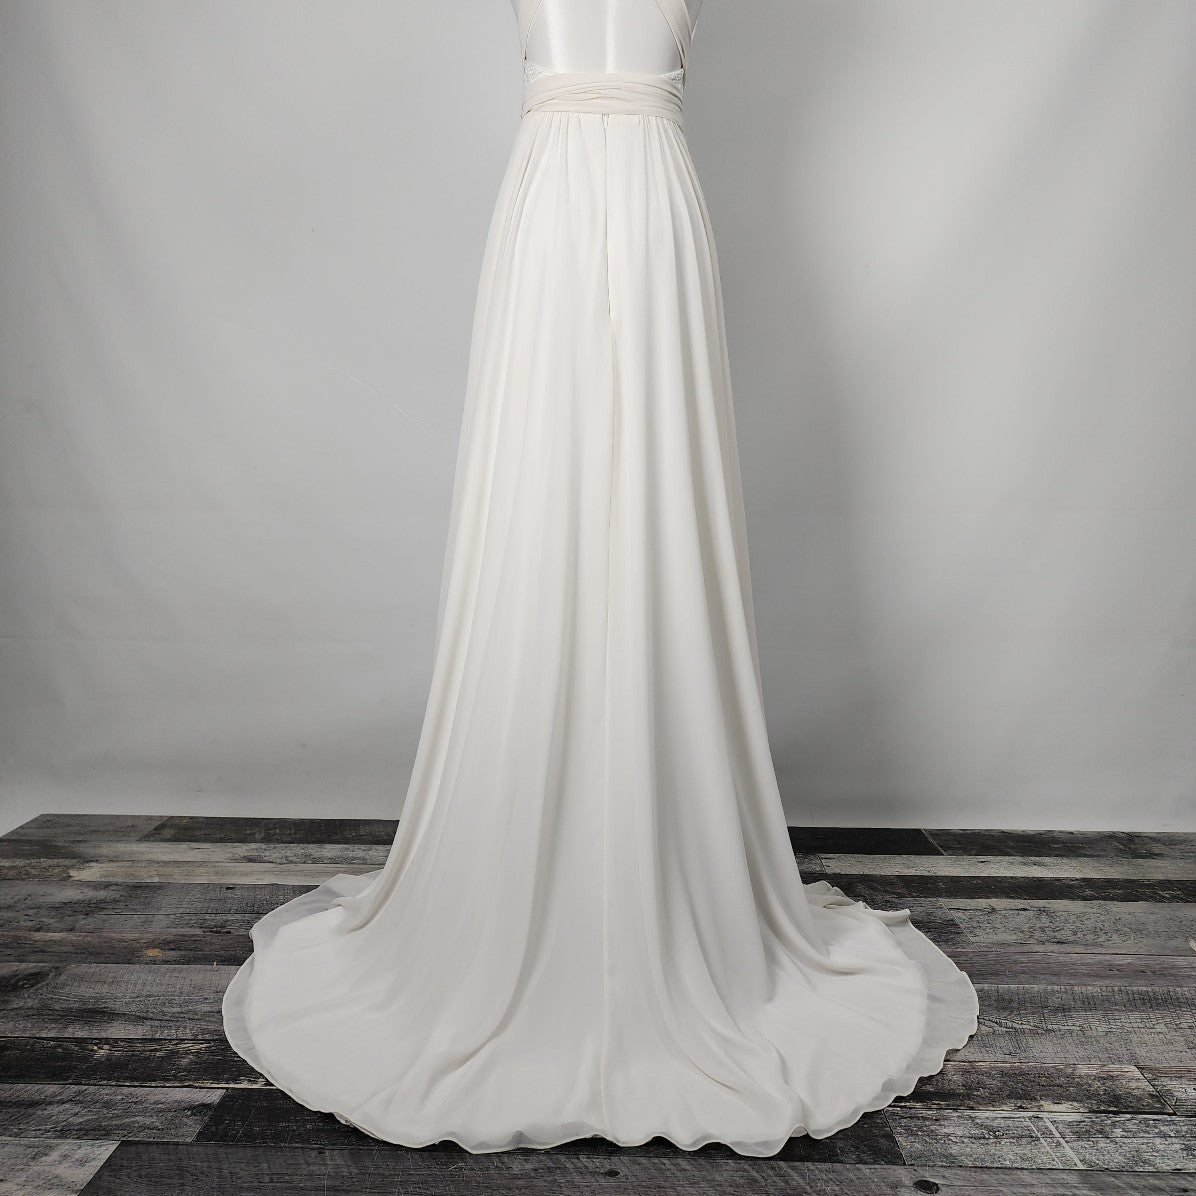 White Lace Chiffon Halter Wedding Dress Size S